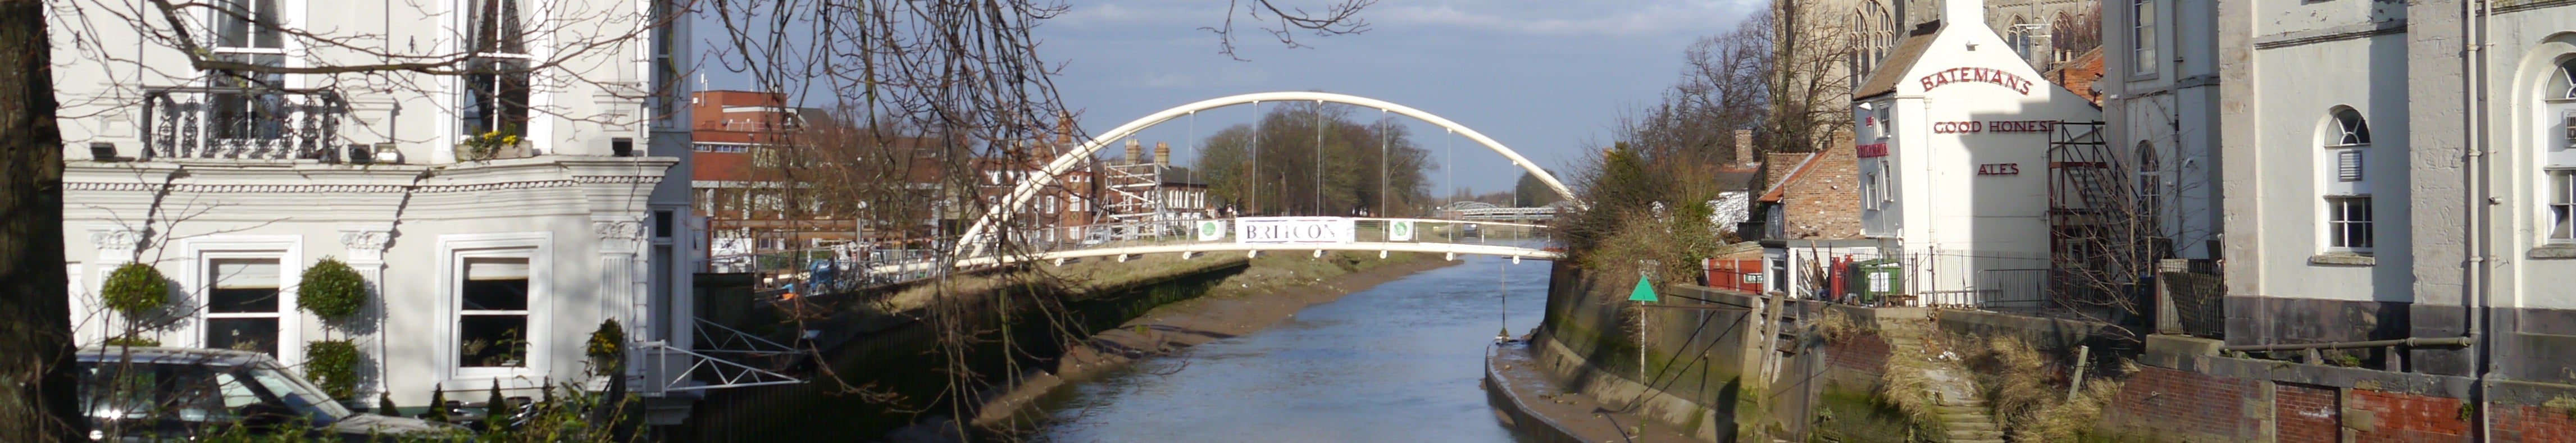 The New St Botolph's Bridge